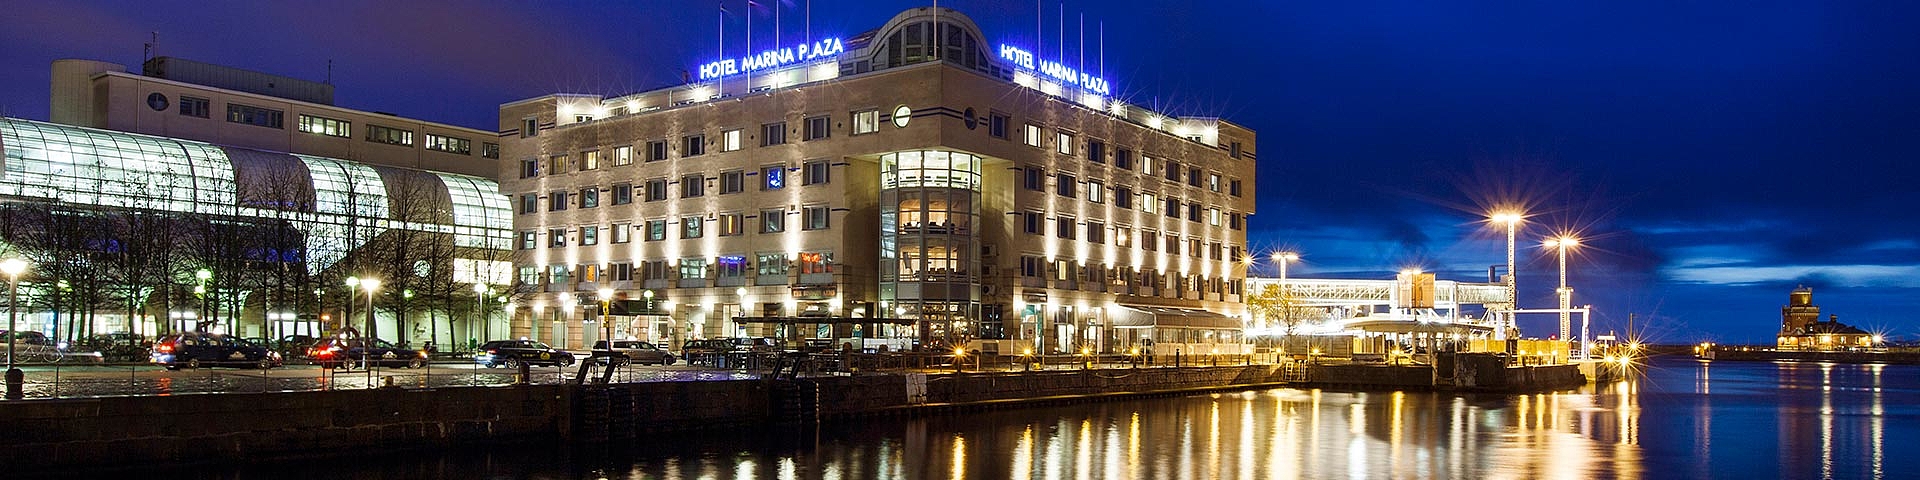 Elite Hotel Marina Plaza | Golf i Helsingborg